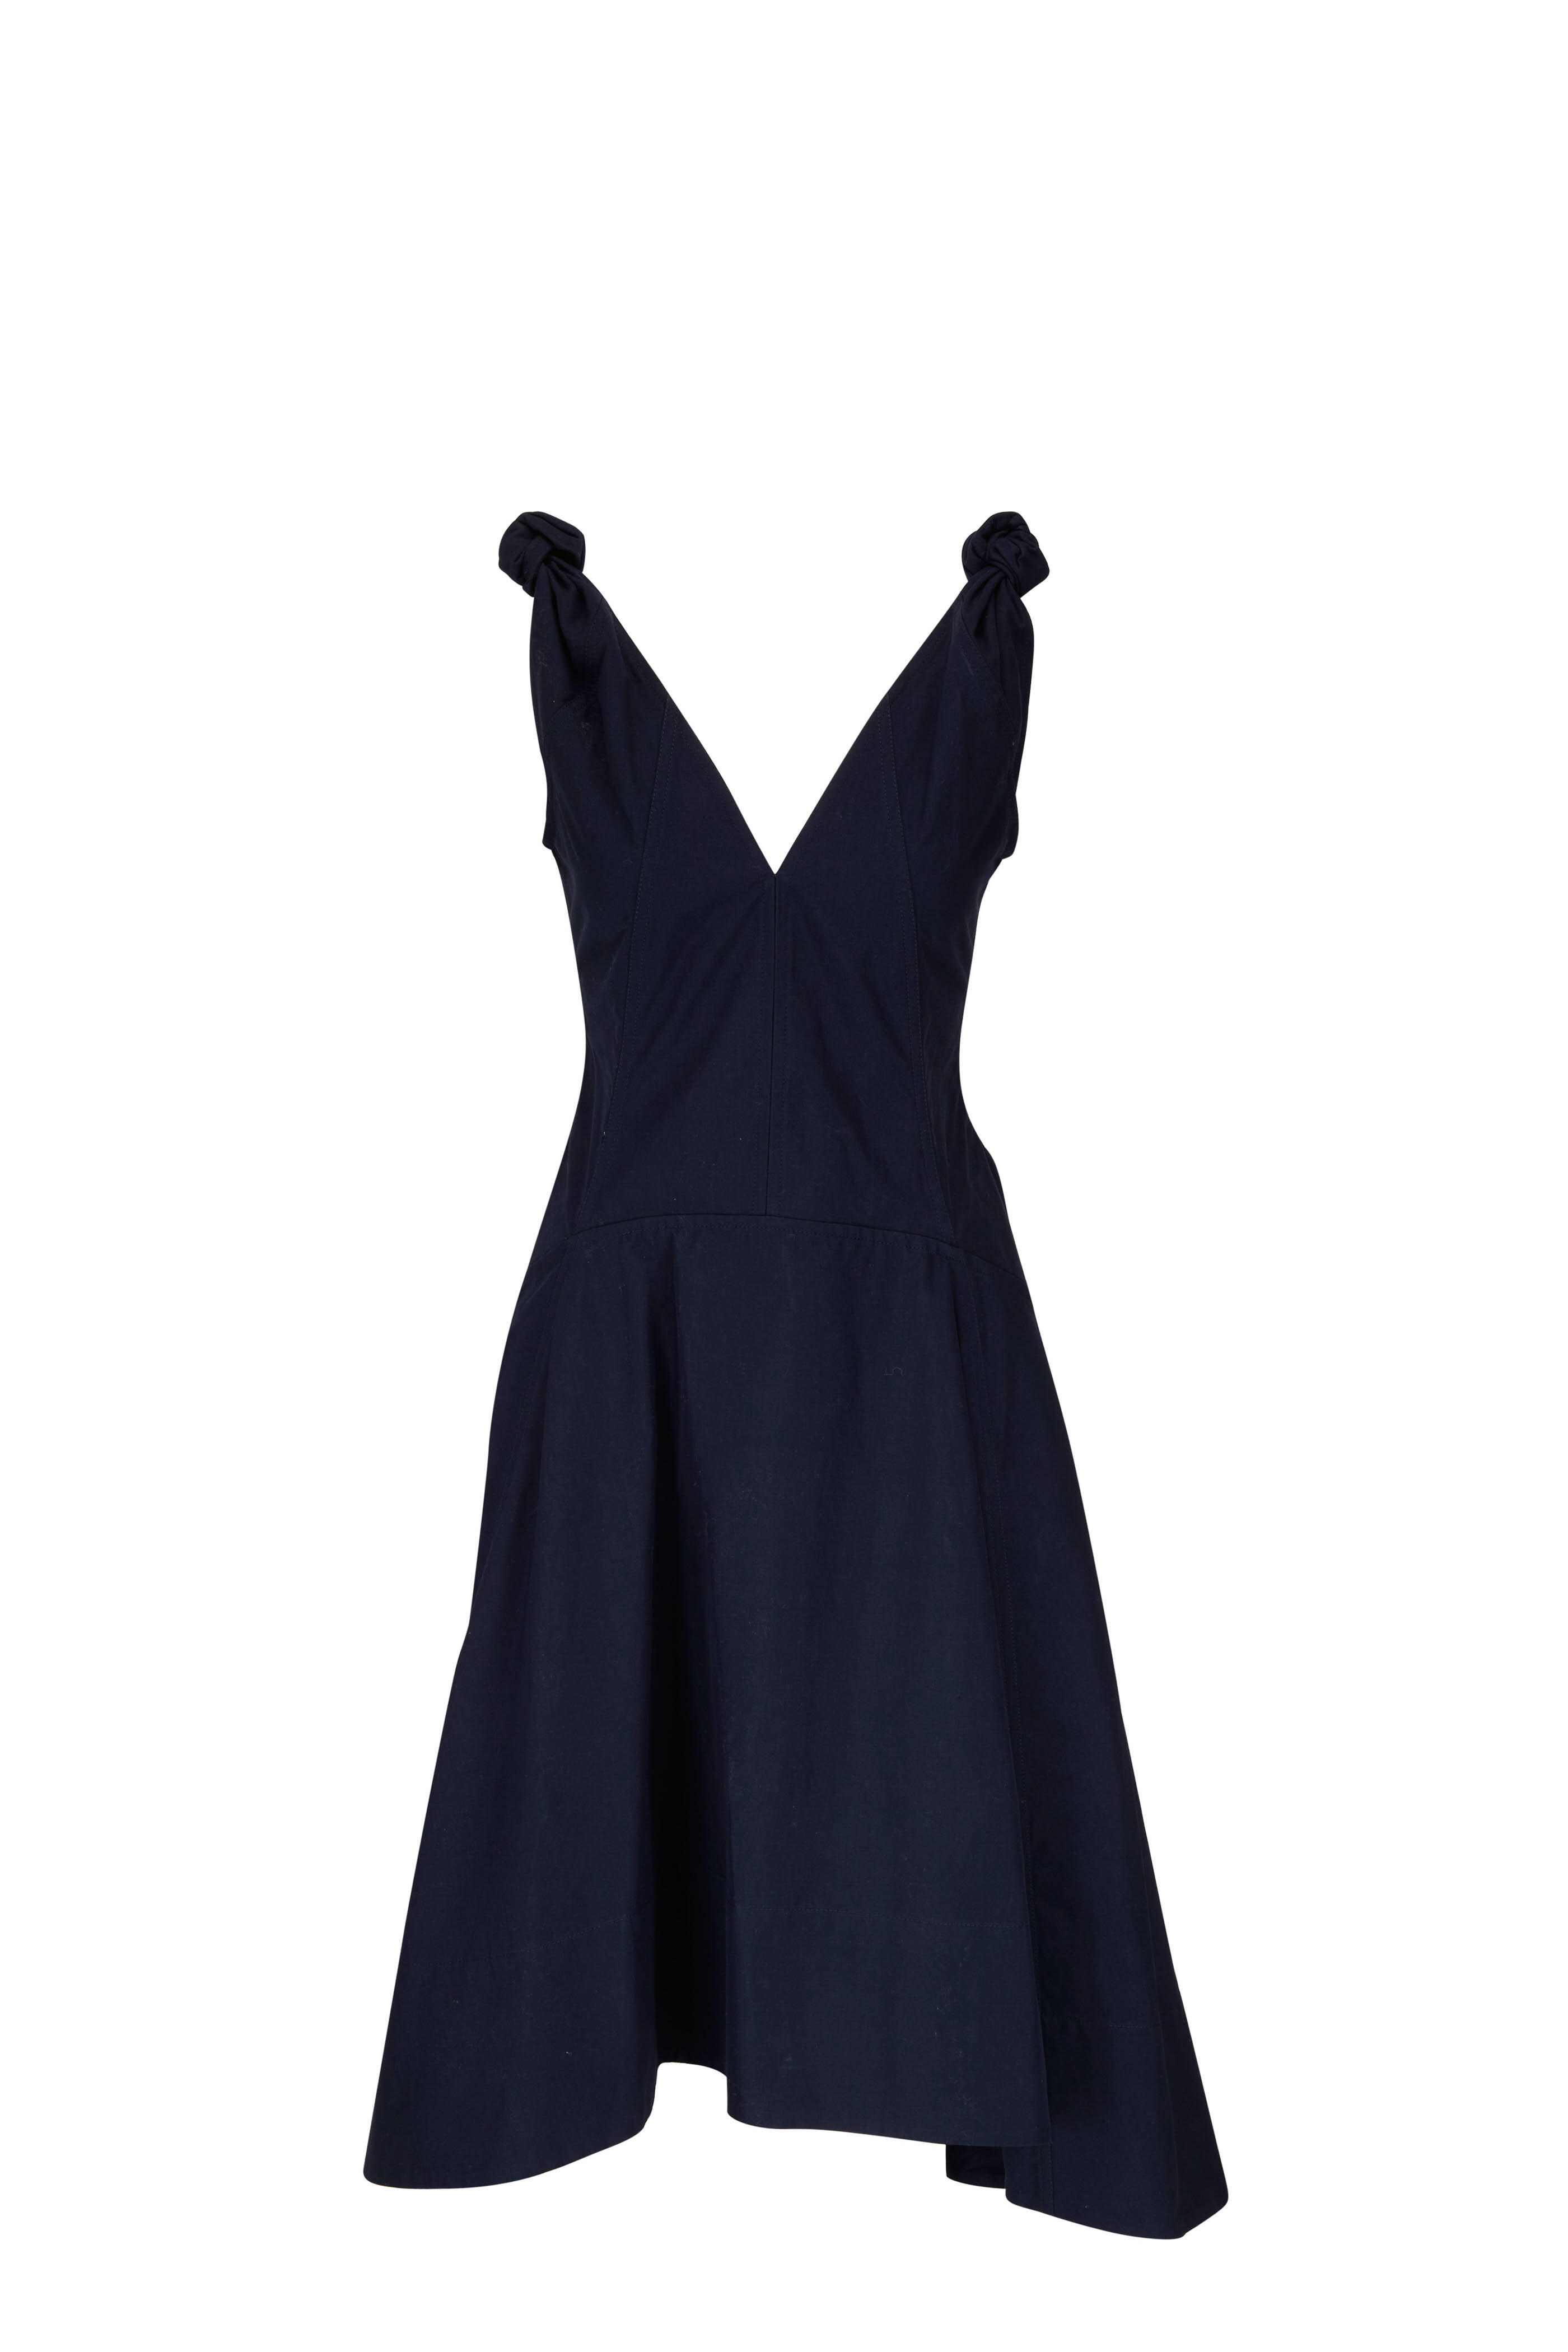 Bottega Veneta - Navy Blue Compact Cotton Canvas Midi Dress